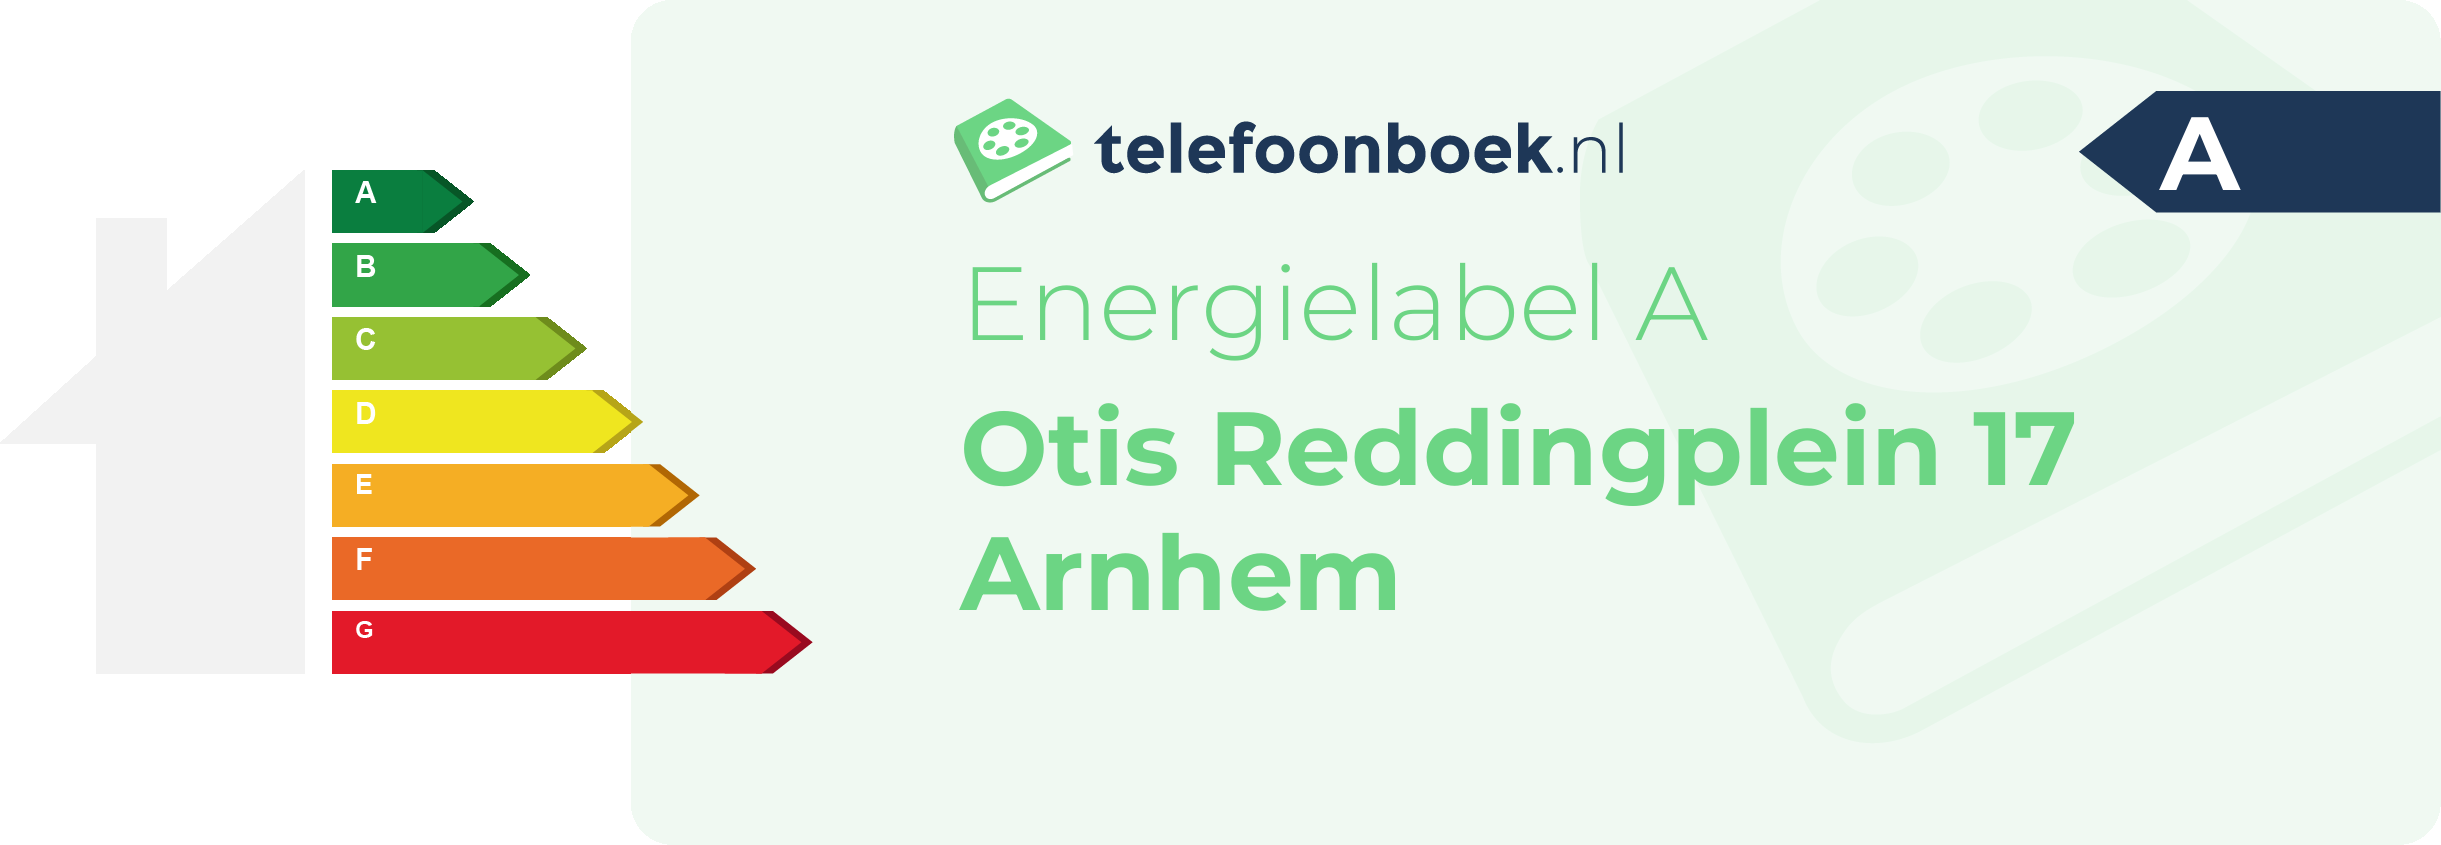 Energielabel Otis Reddingplein 17 Arnhem